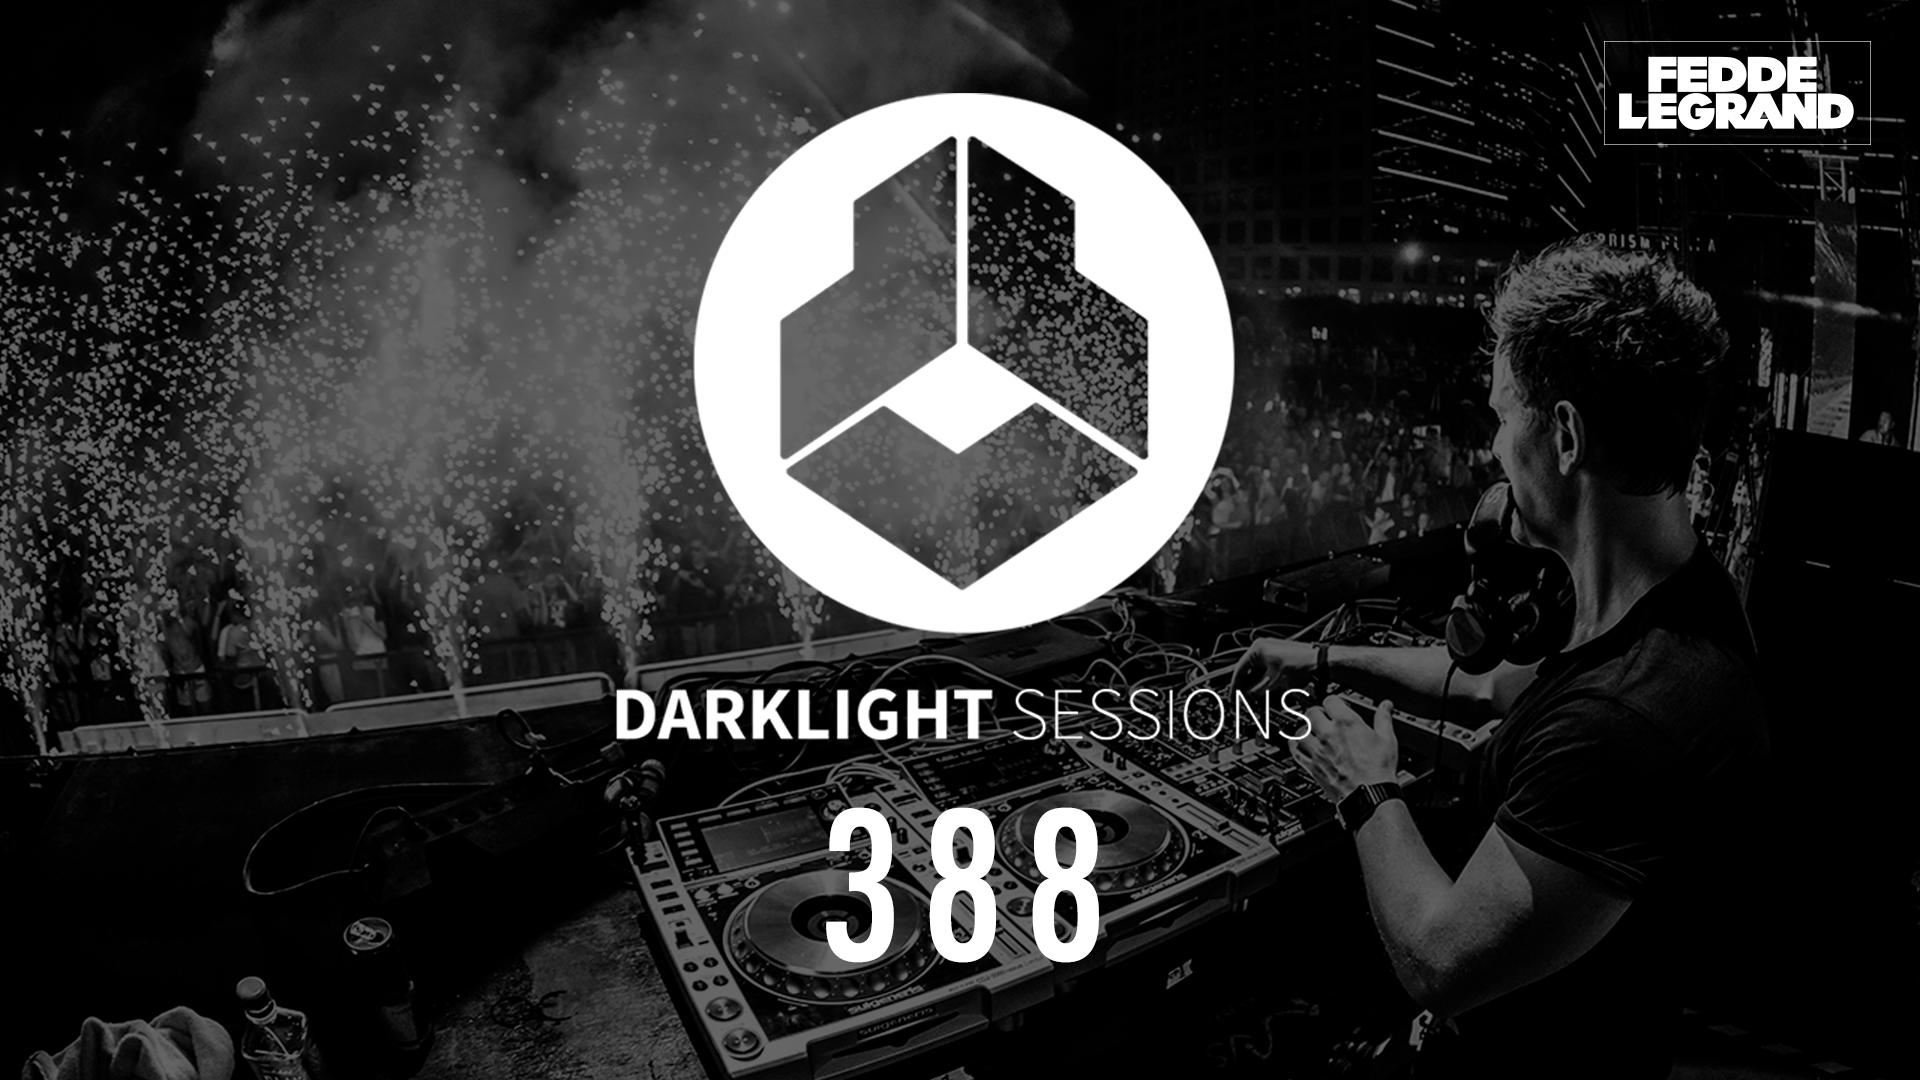 Darklight Sessions 388